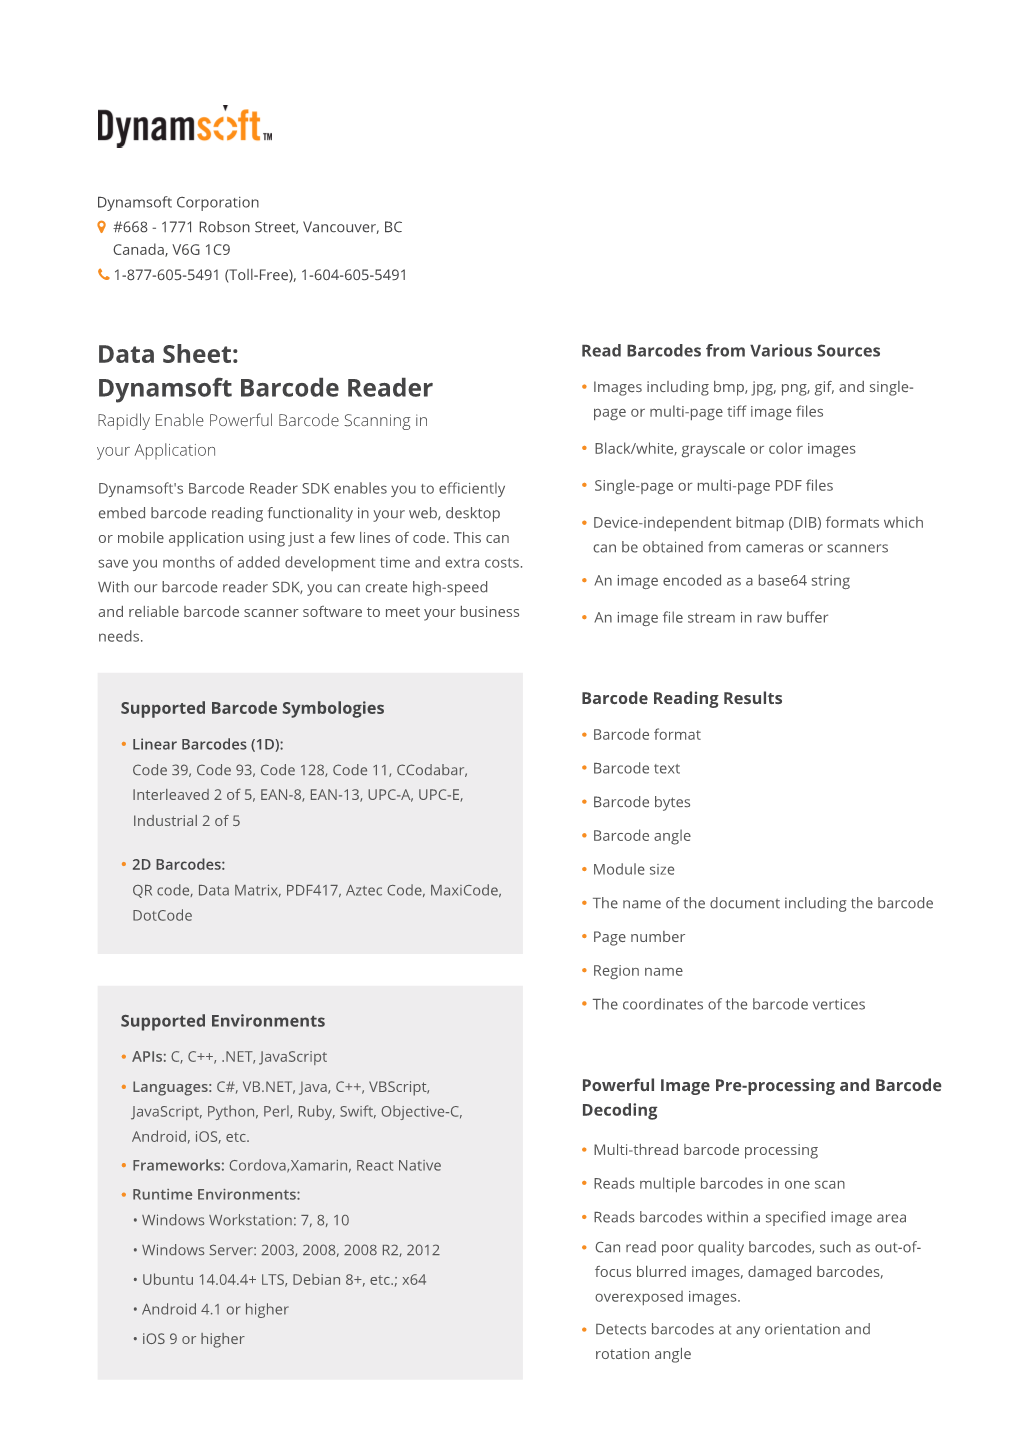 Data Sheet: Dynamsoft Barcode Reader